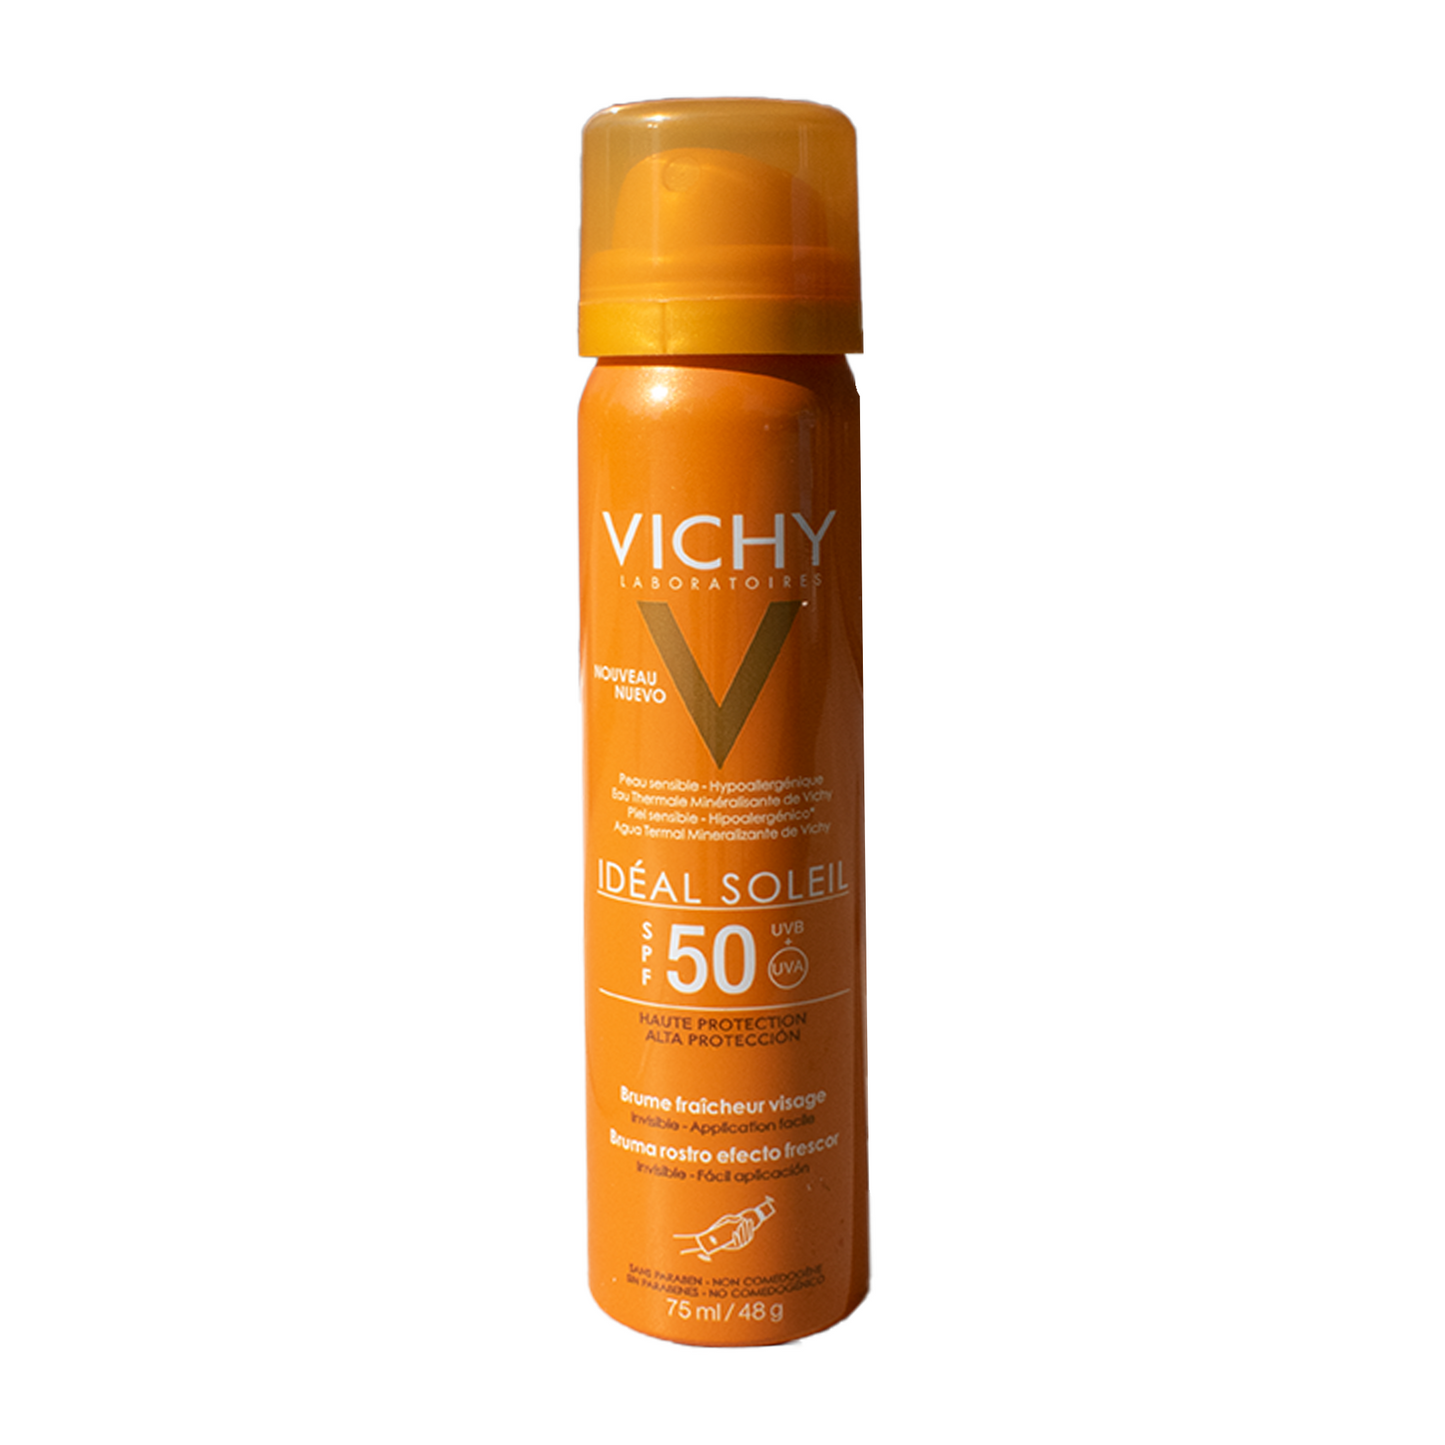 Vichy Ideal Soleil Spray SPF 50+